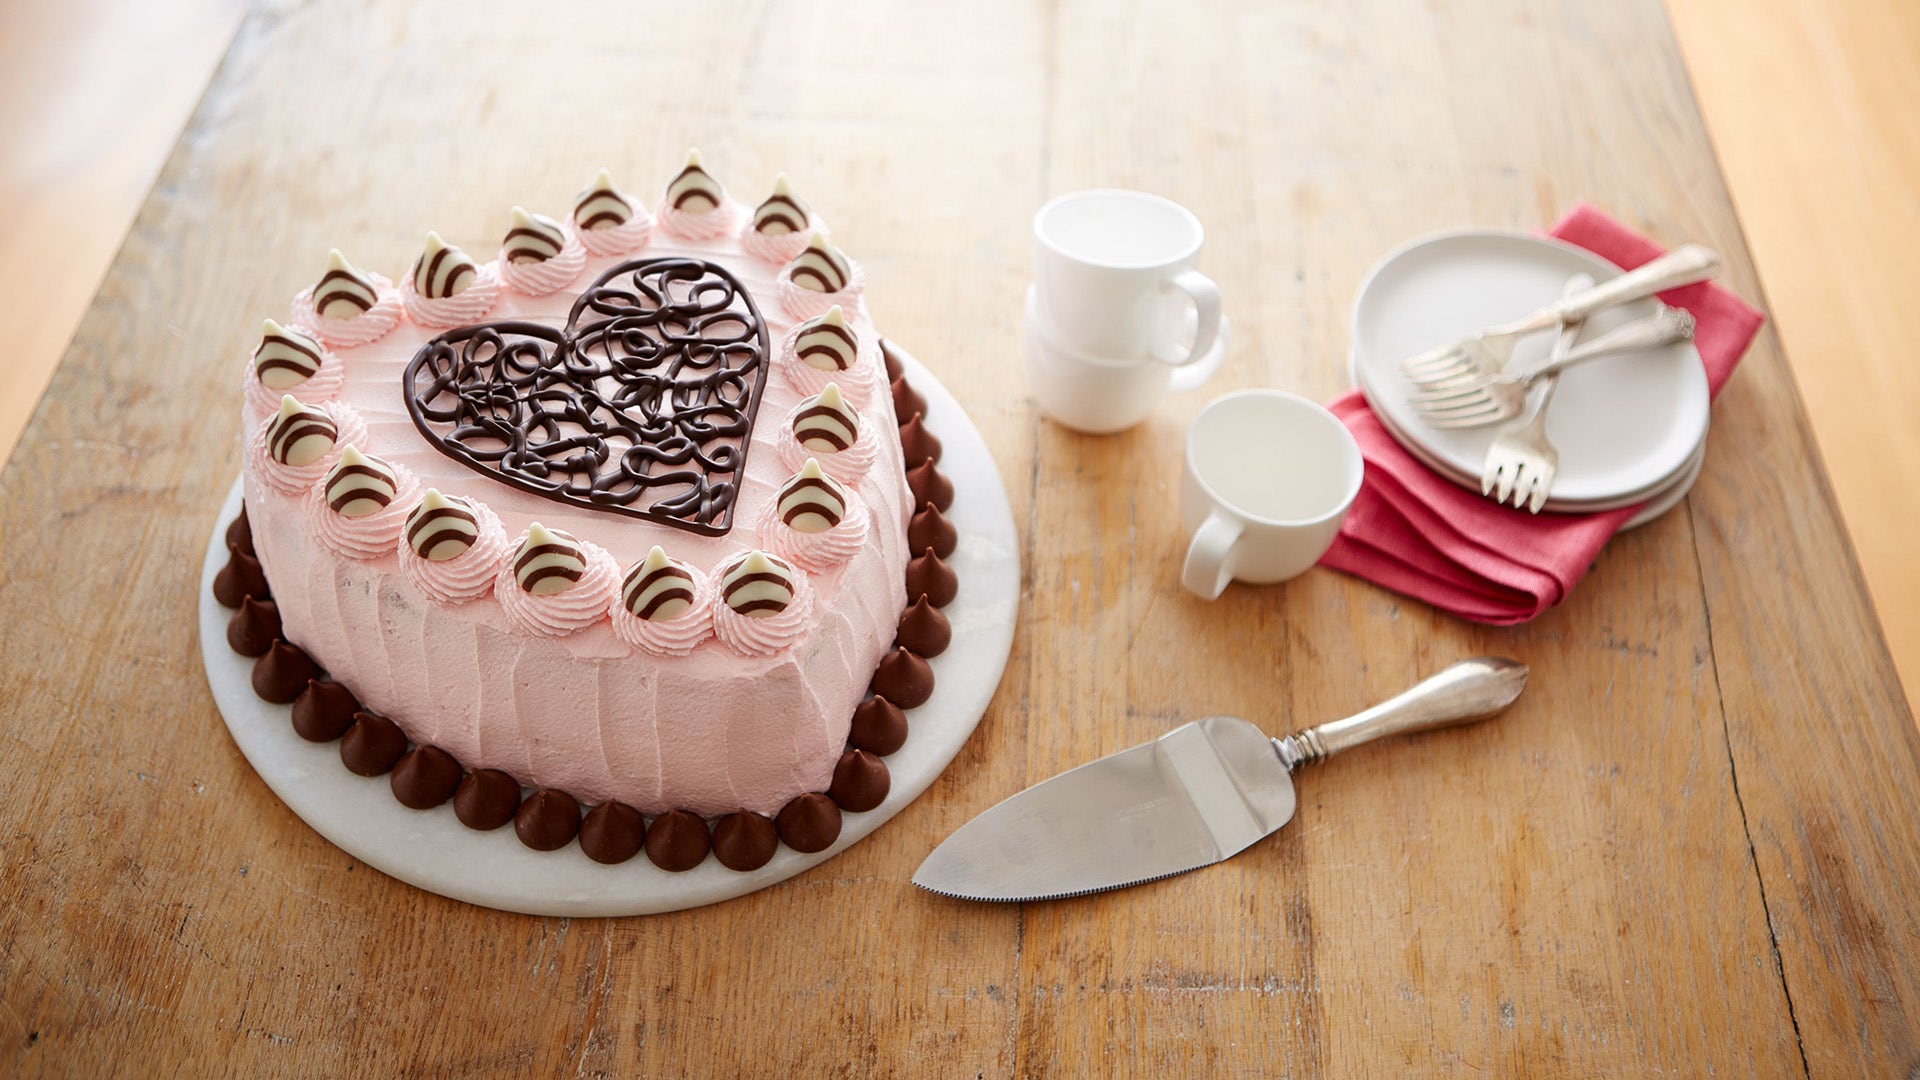 Love Story Cake - Valentine's Cake Tutorial - CakesDecor